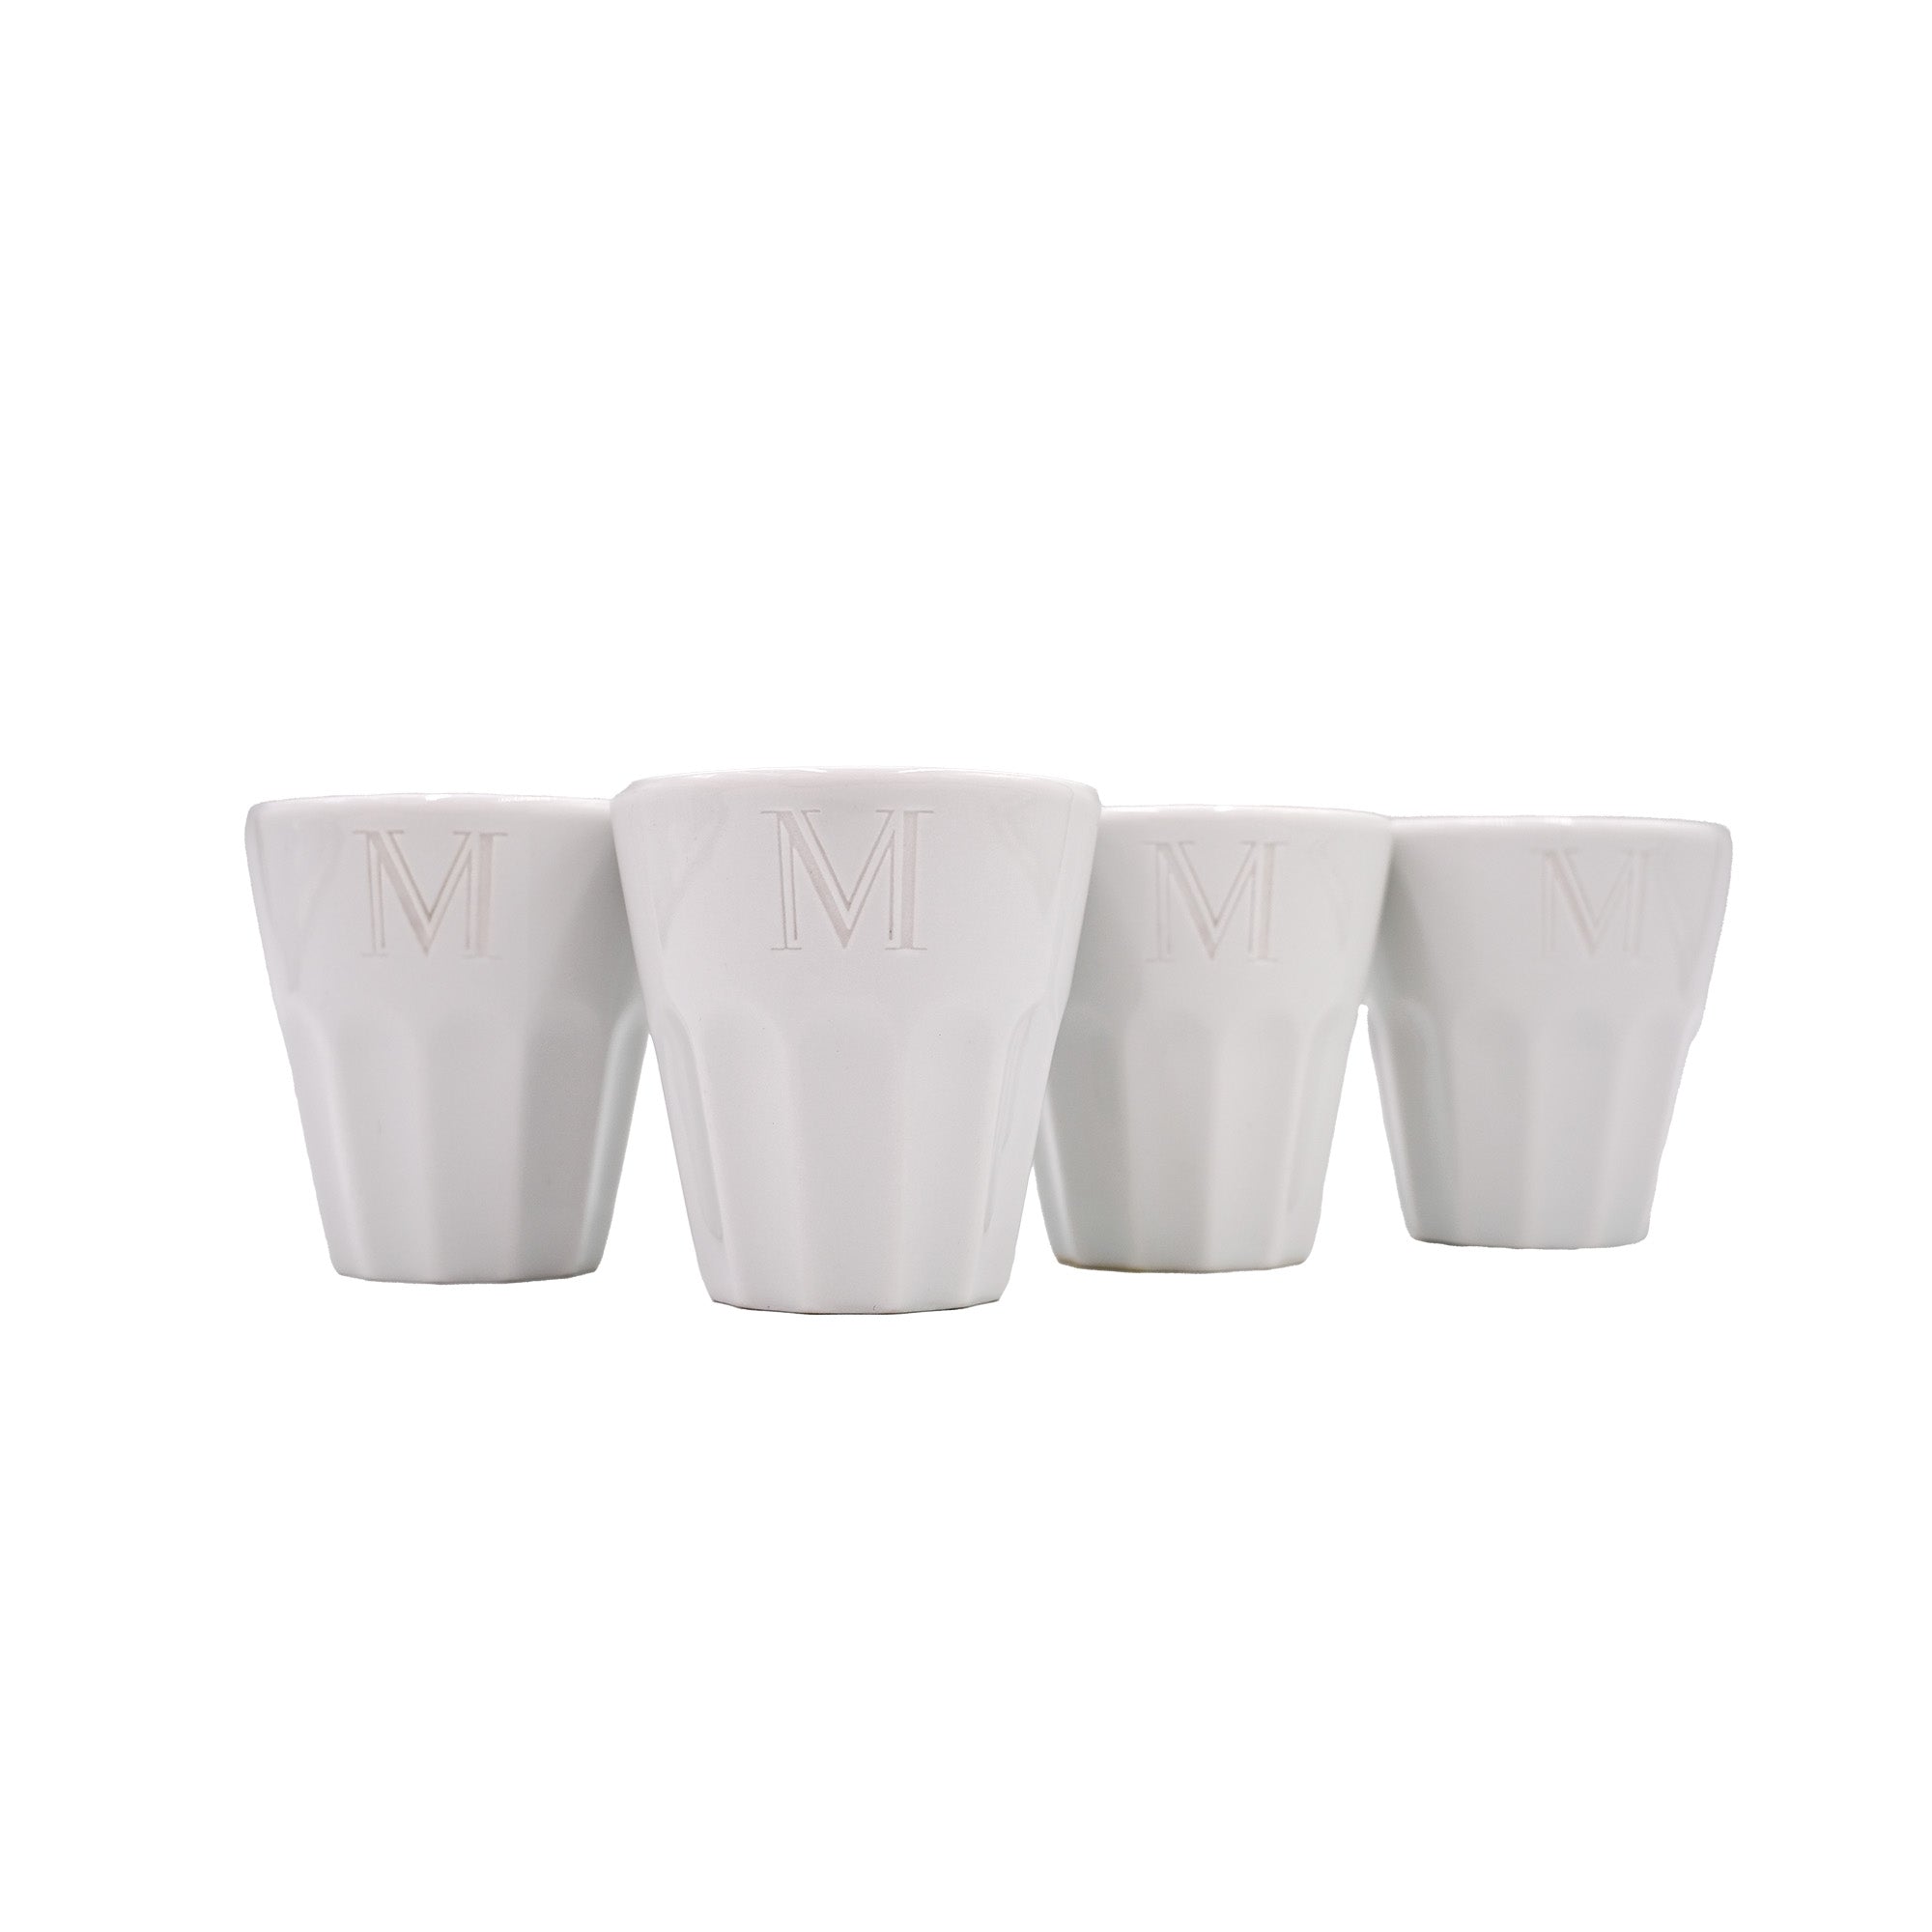 Cups - Stackable procelain